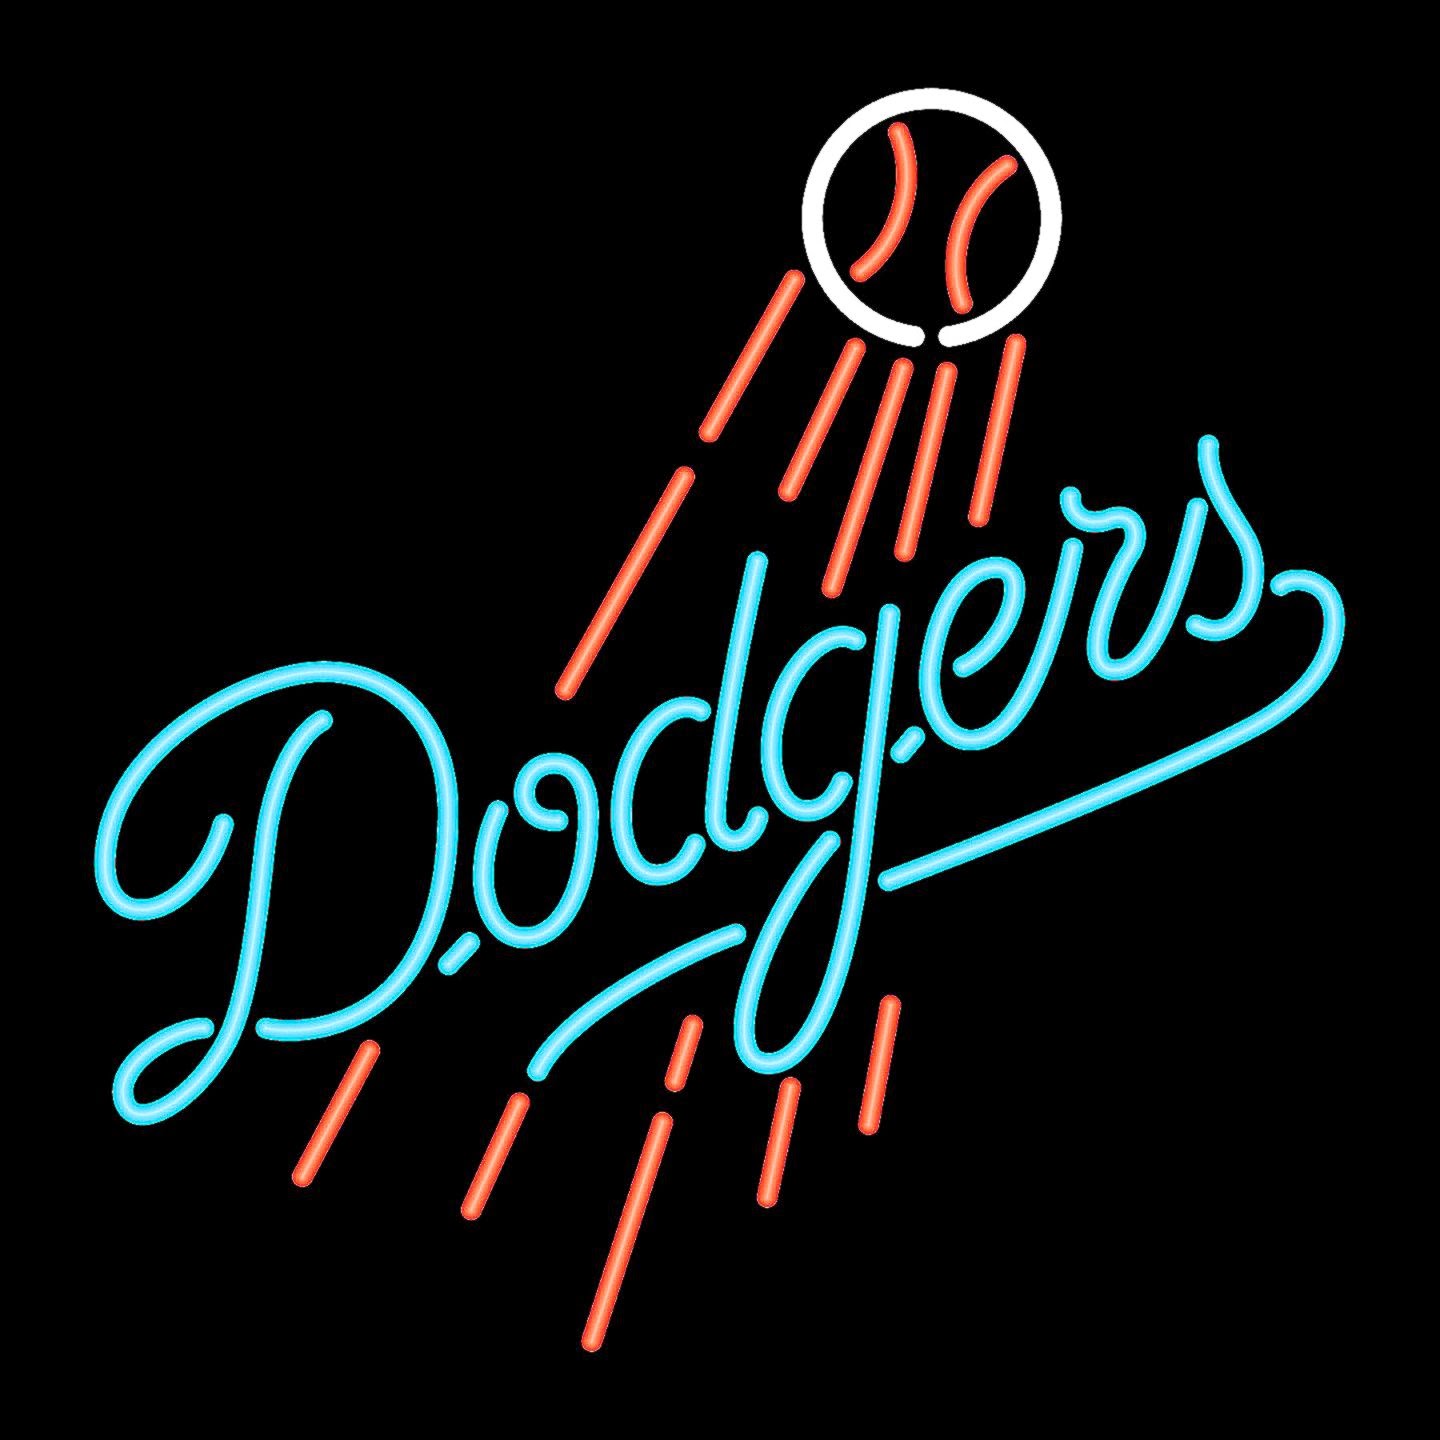 dodgers wallpaper hd,font,text,logo,graphic design,line